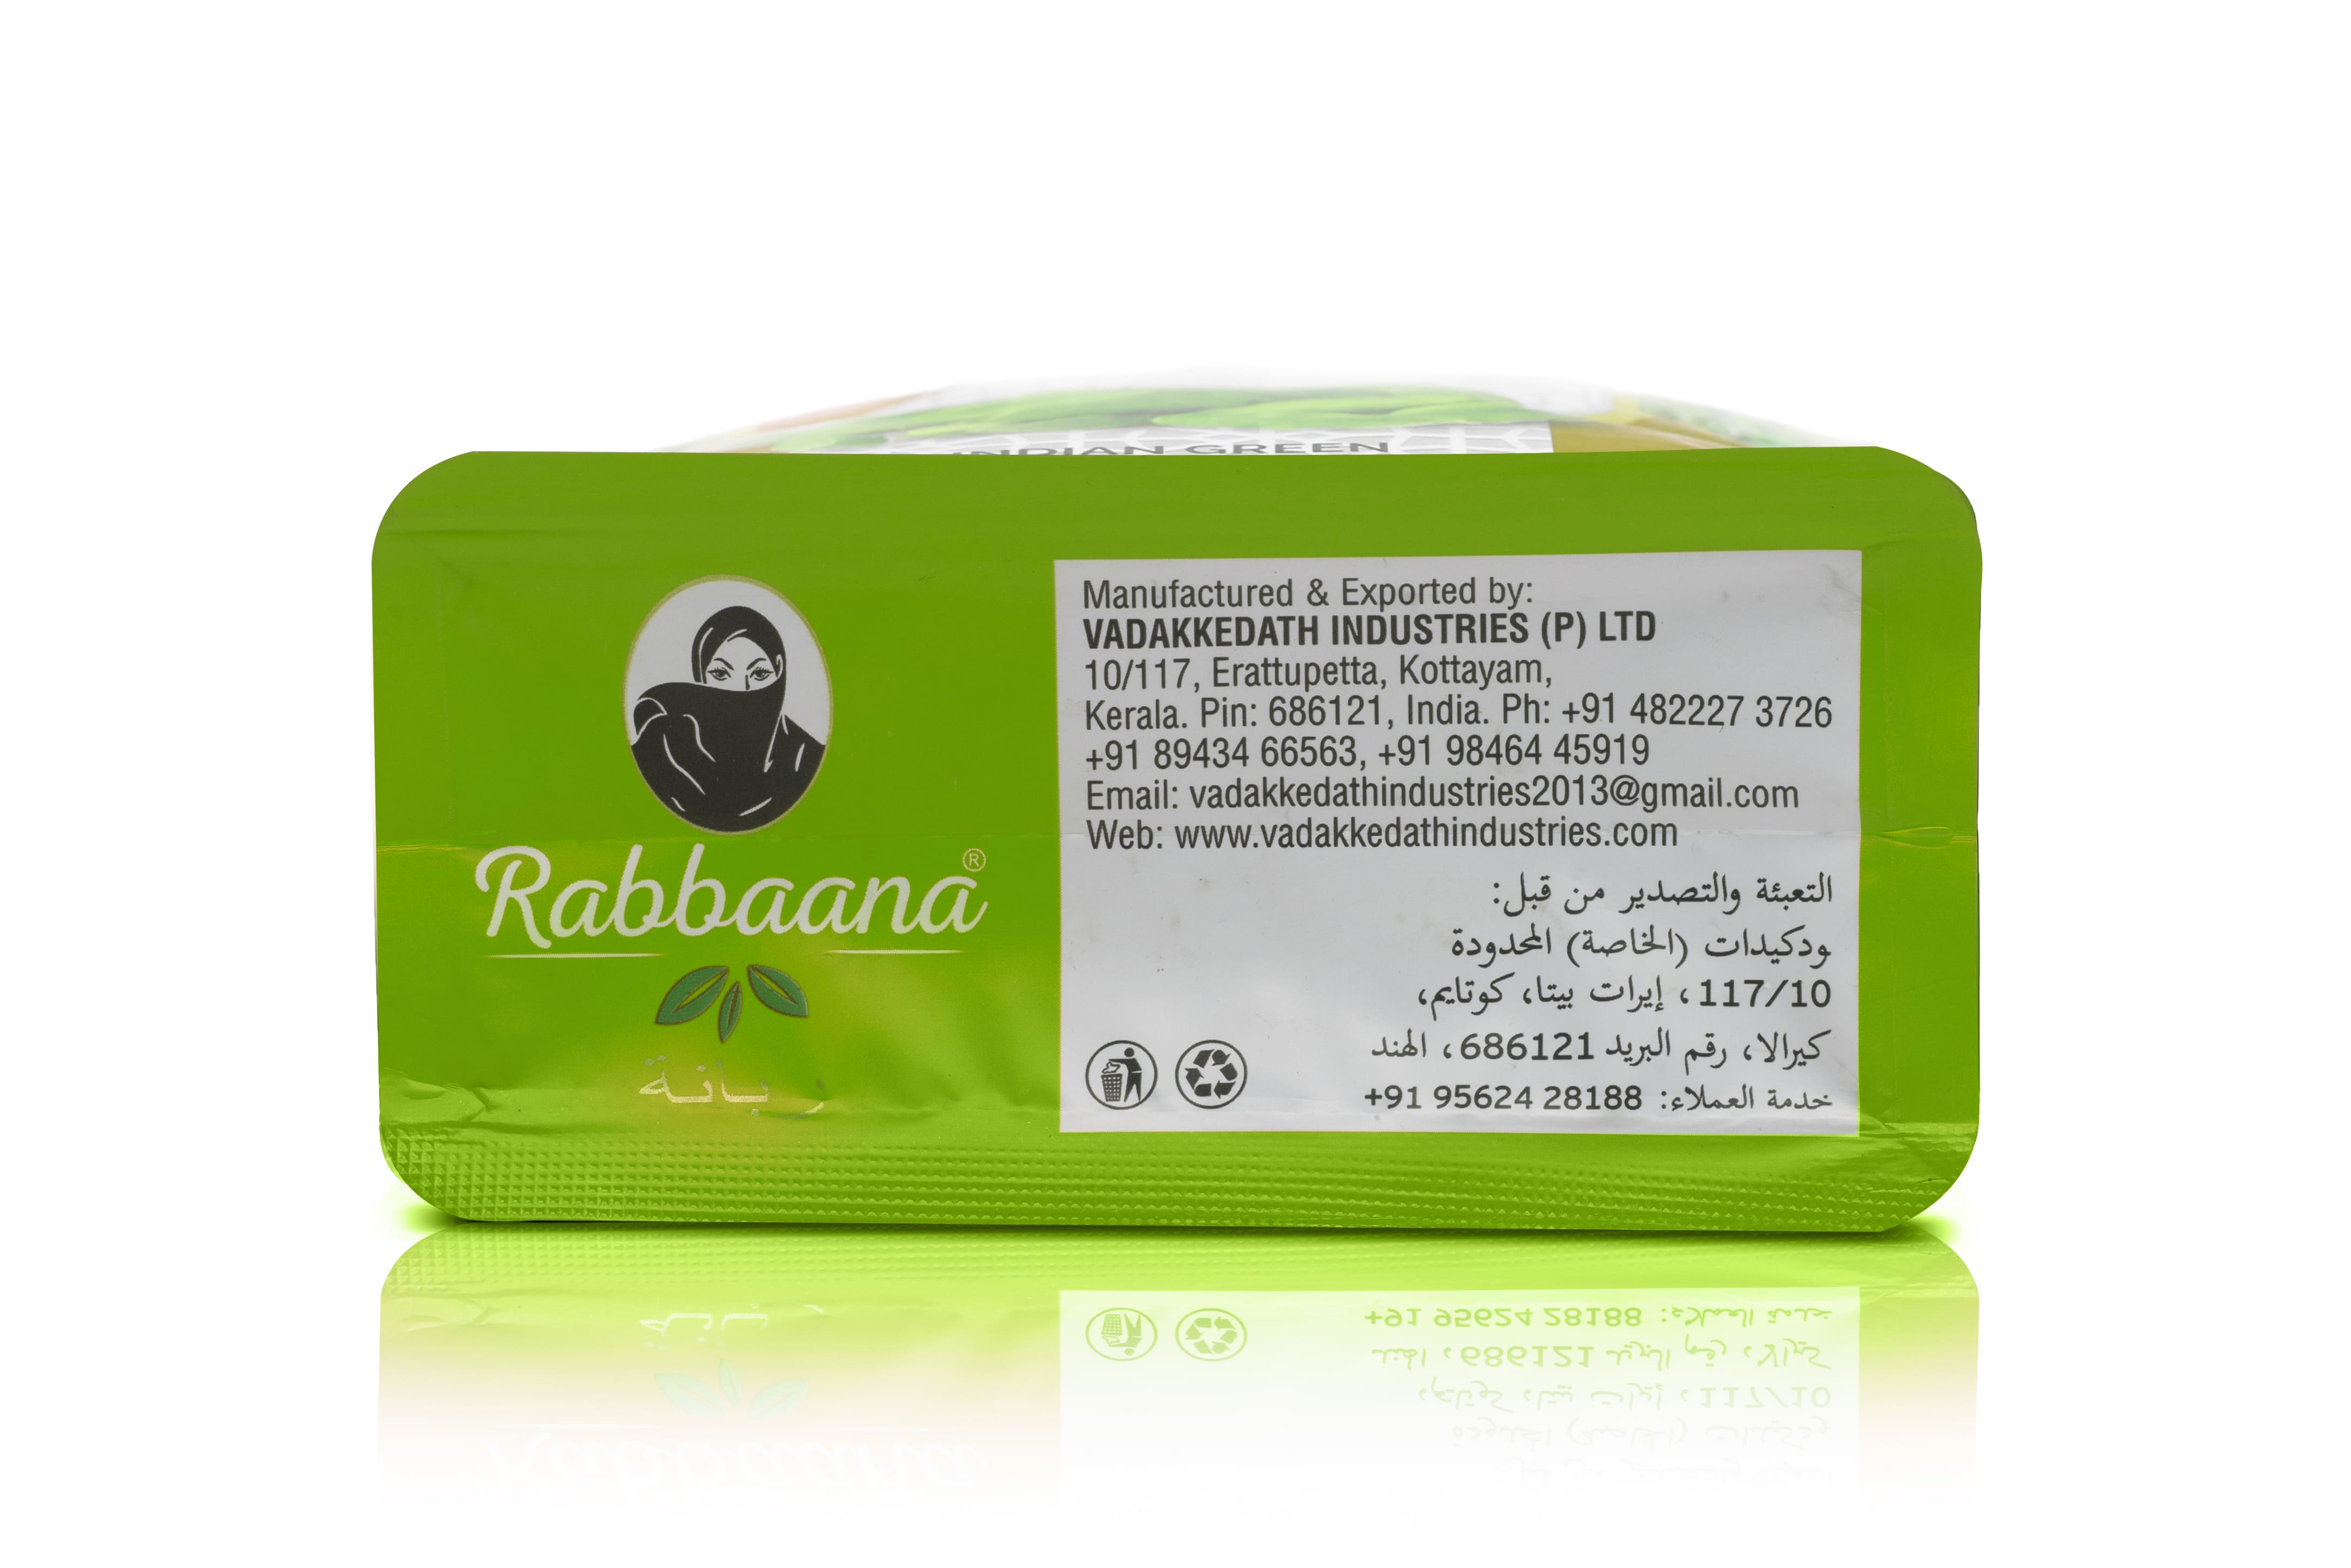 Rabbaana Worlds Best Green Cardamom producers & exporters